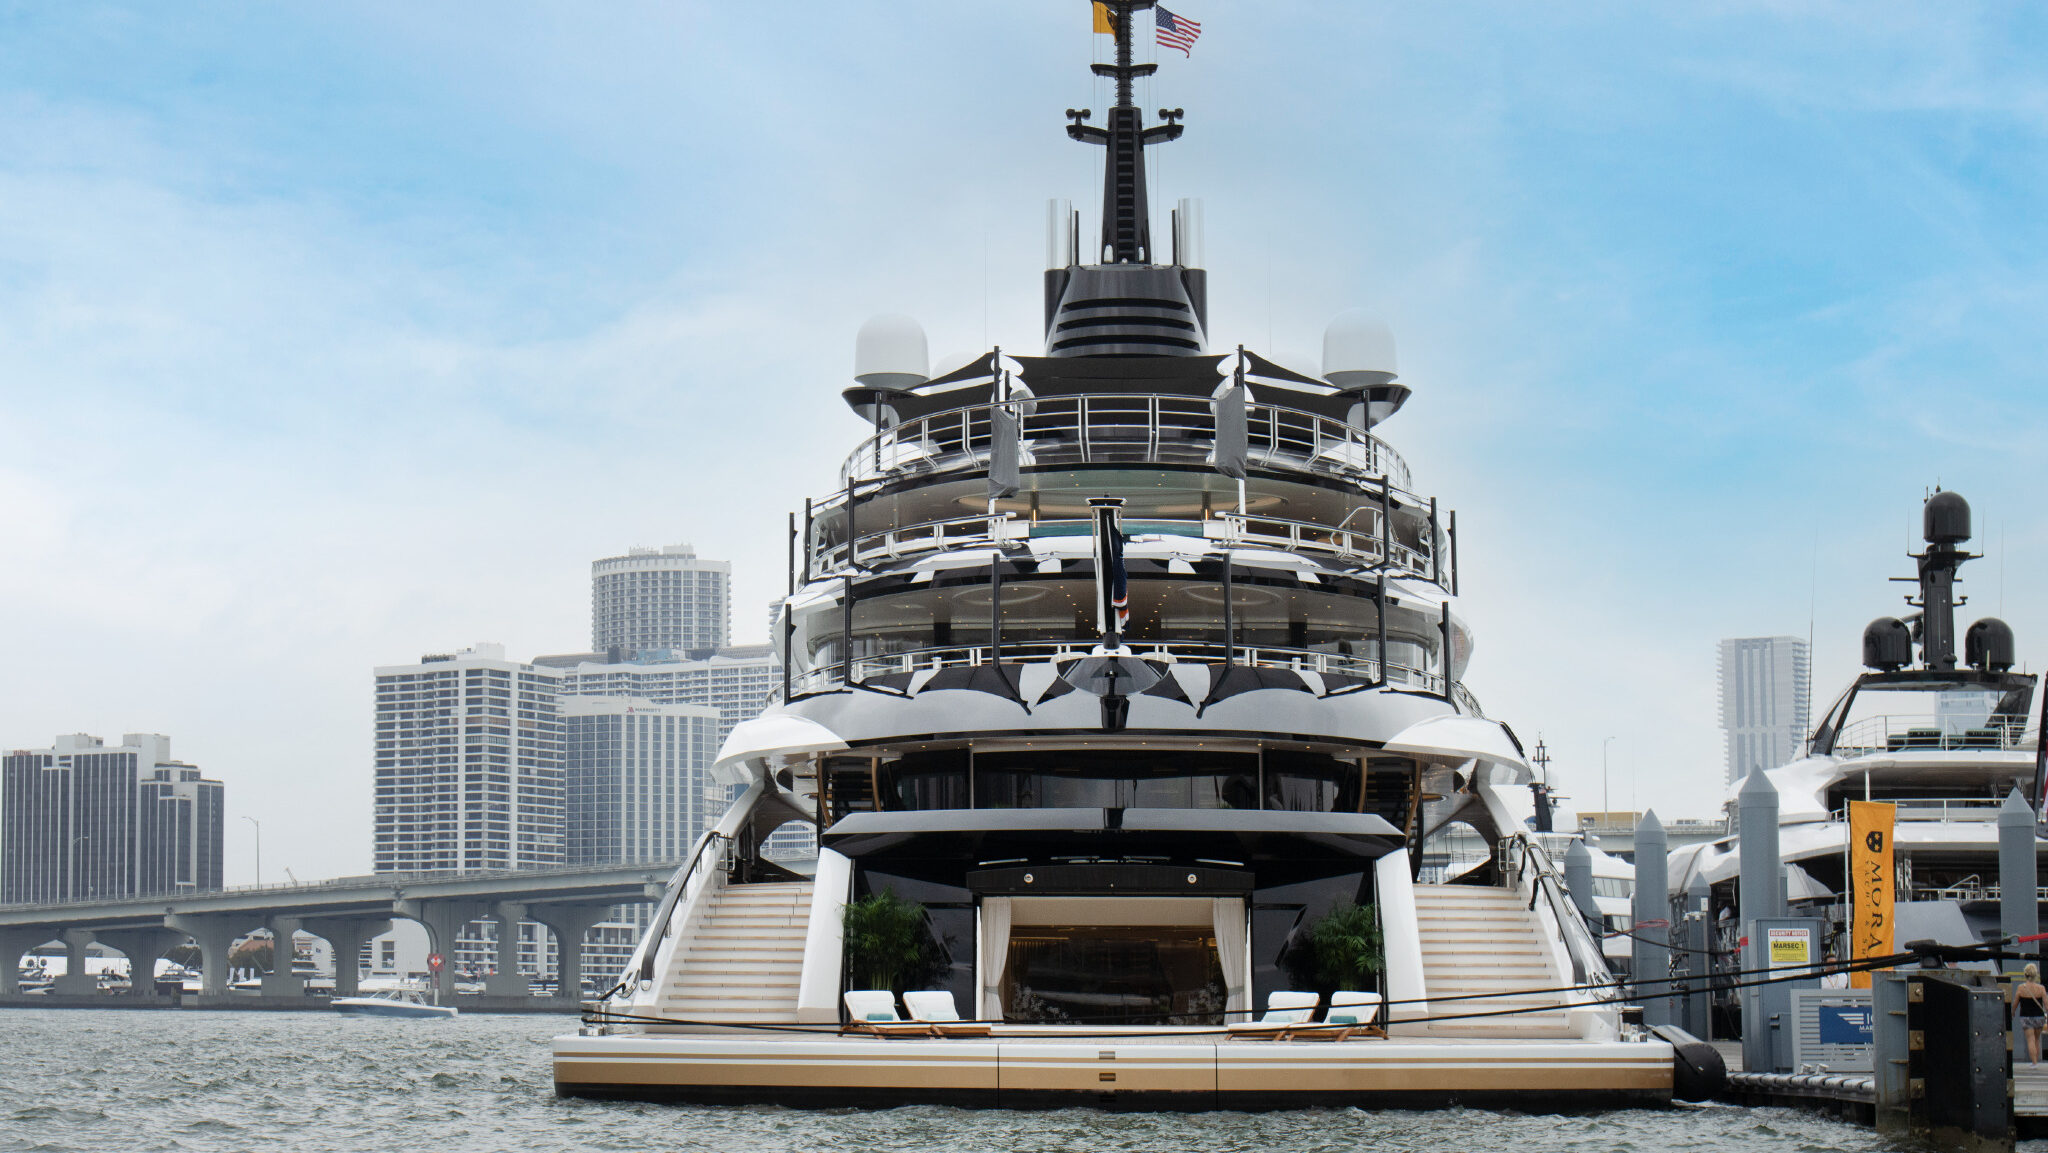 Miami International Boat Show opens across six locations Marine